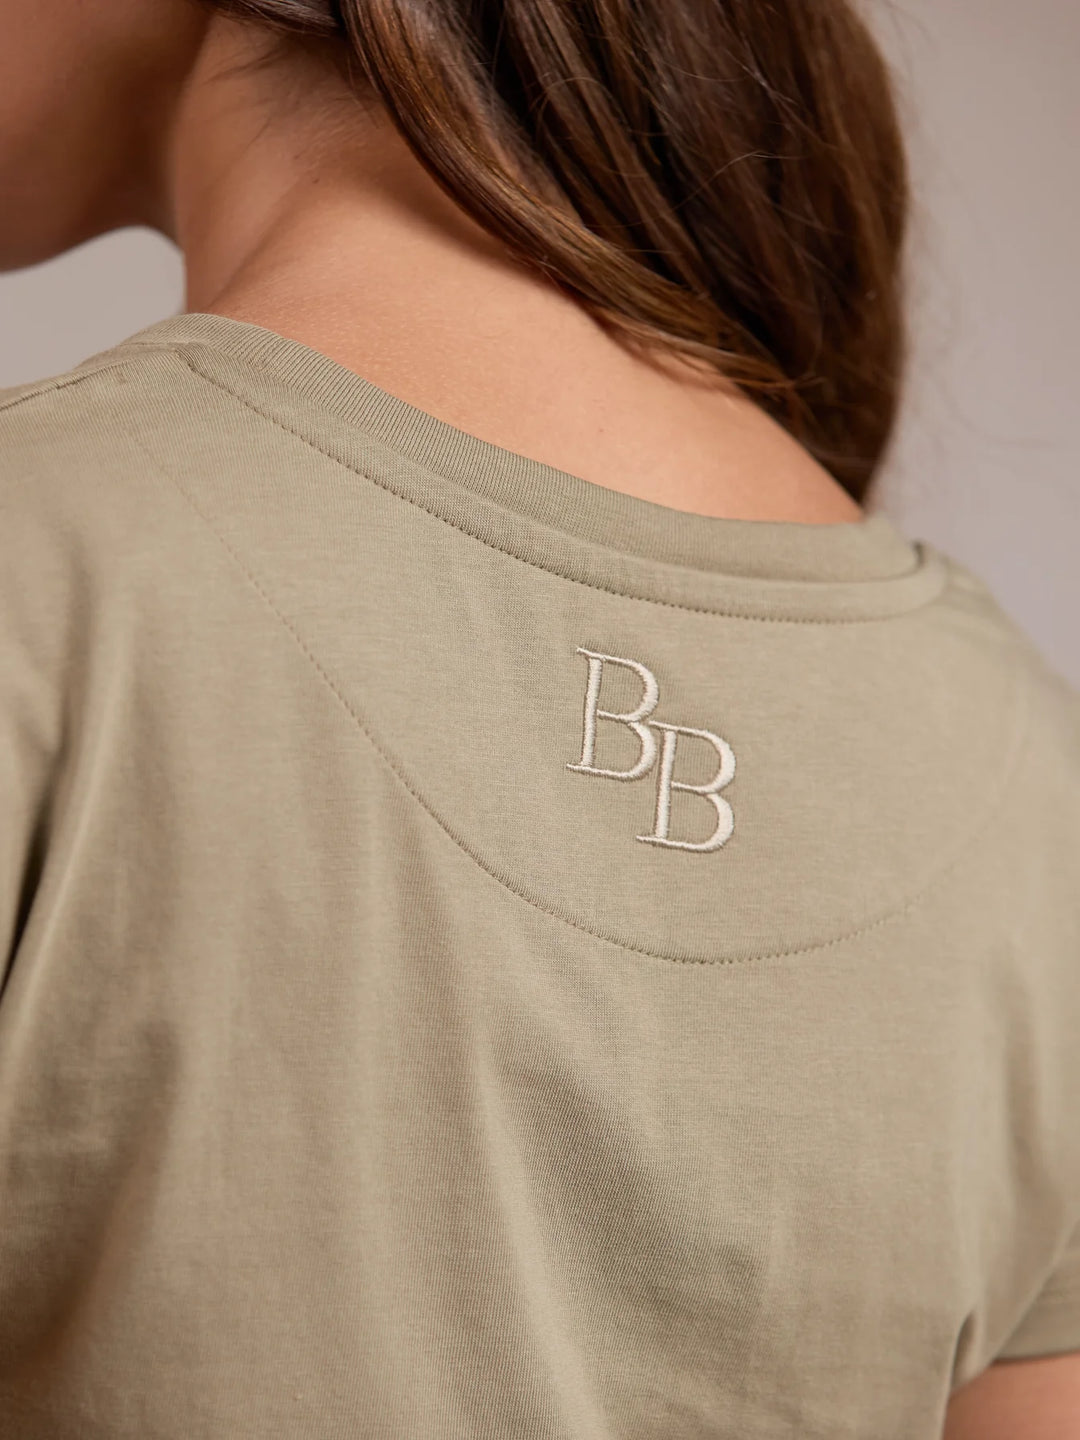 Beaumont & Bear Ladies Otterton T-Shirt